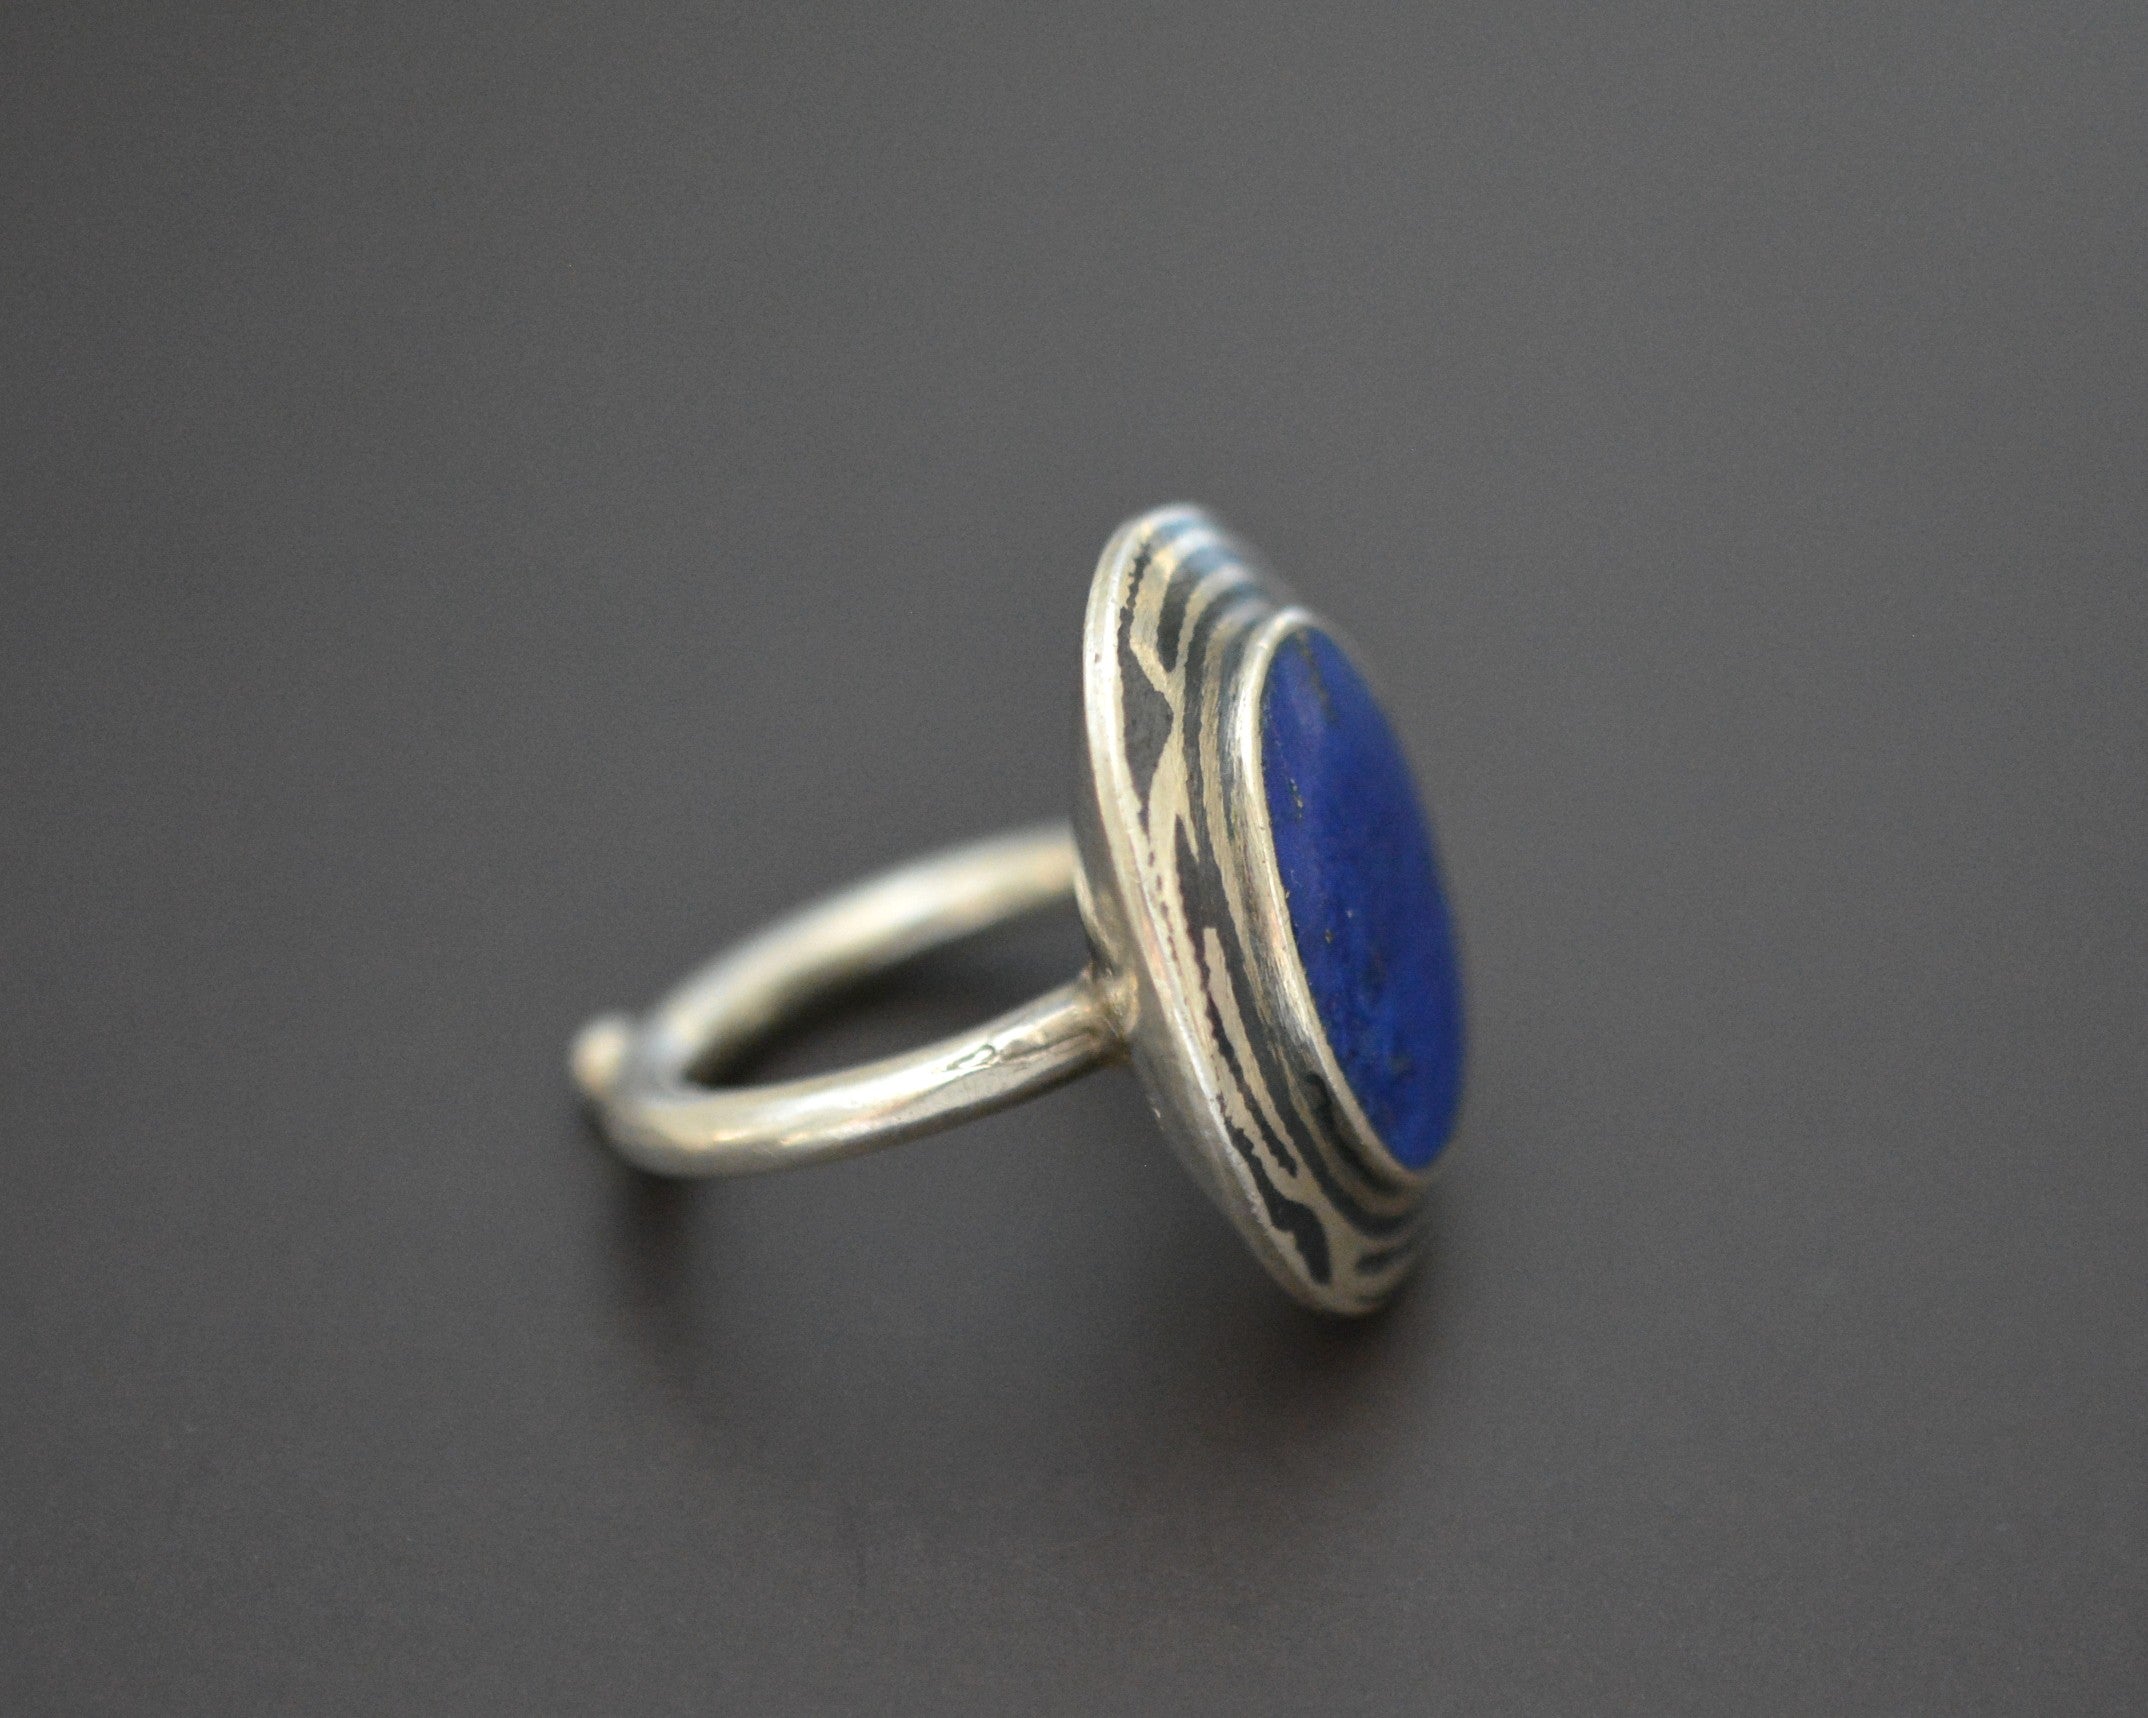 Afghani Lapis Lazuli Ring - Size 7